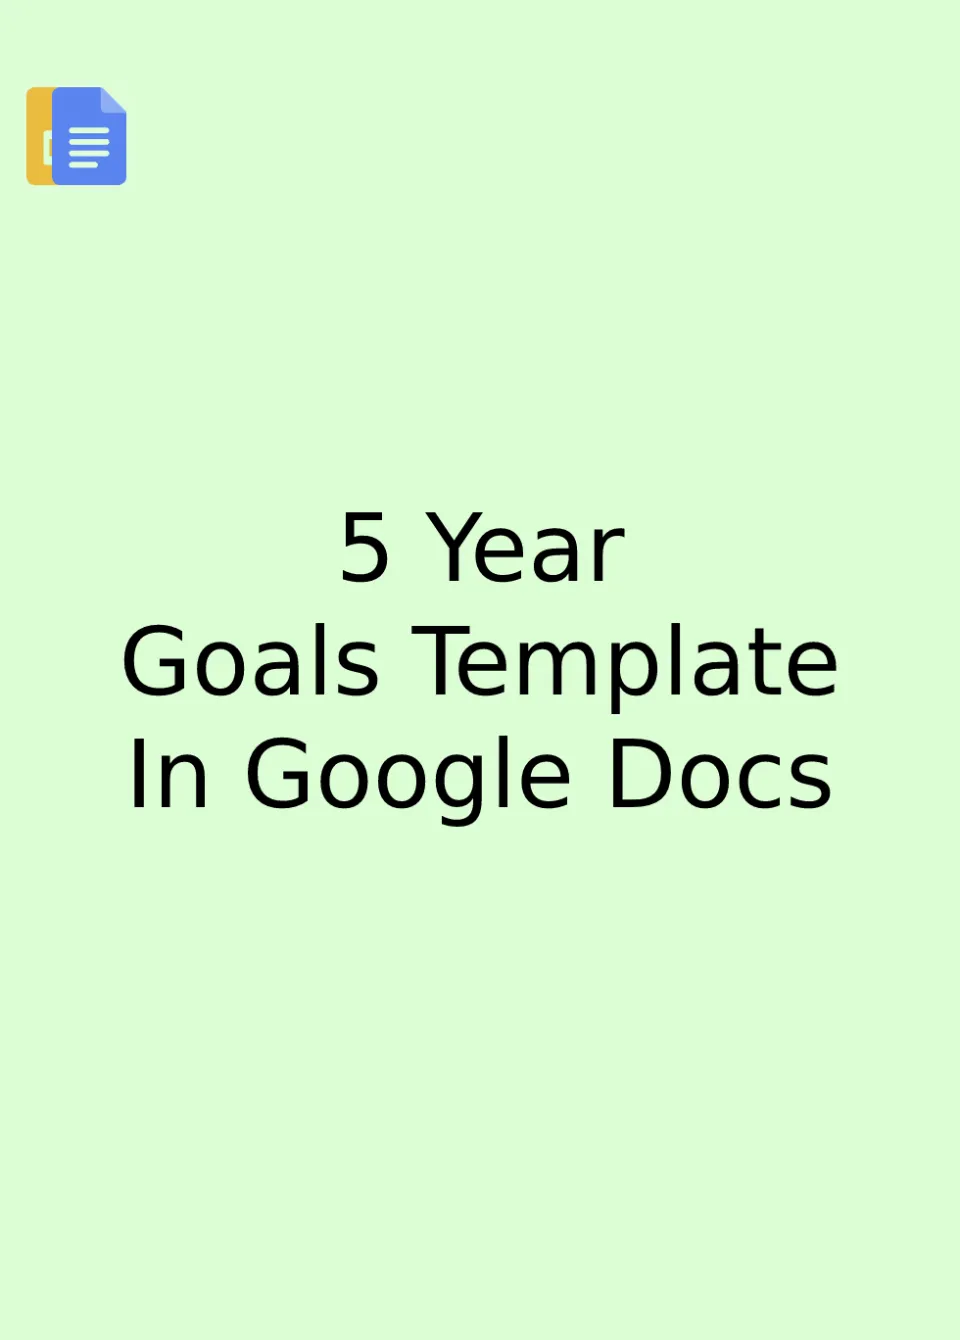 5 Year Goals Template Google Docs